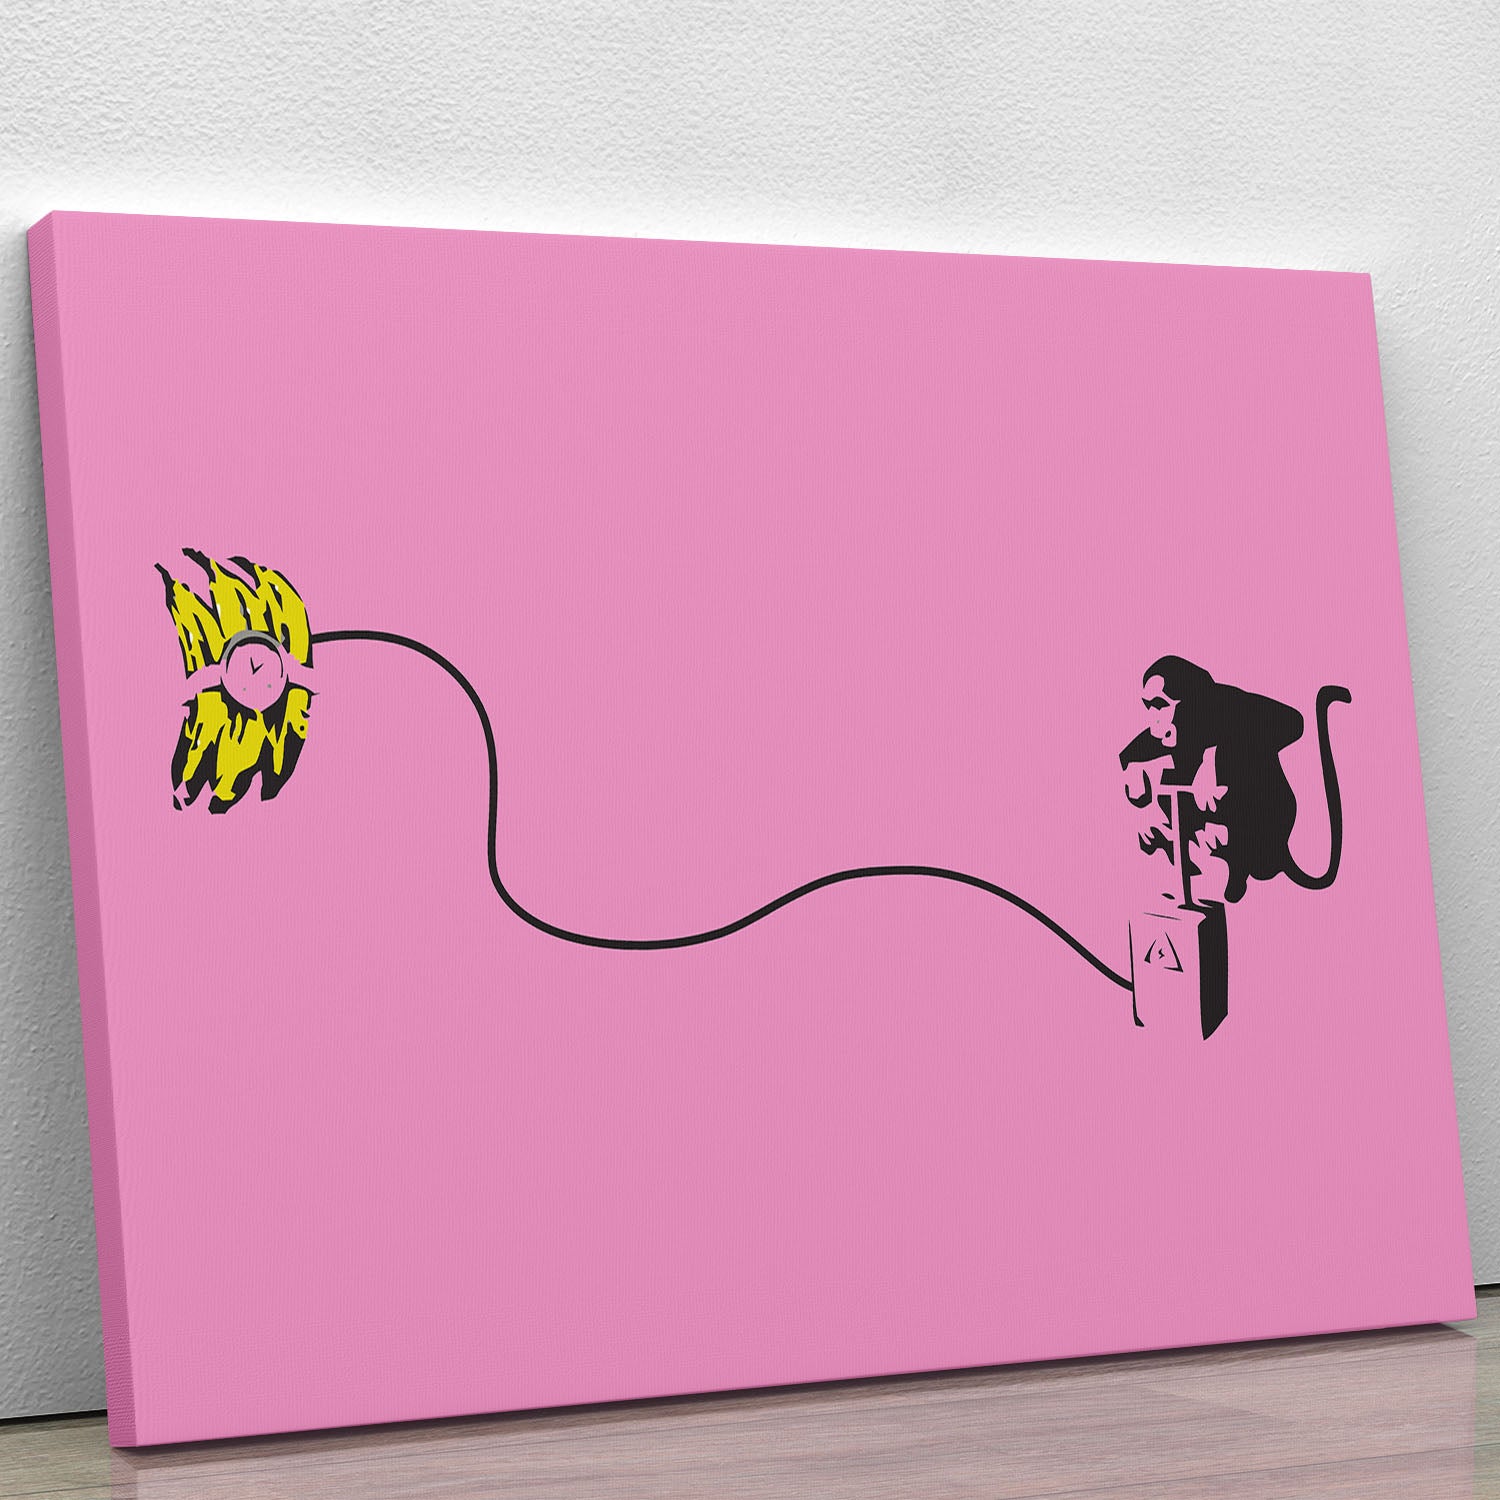 Banksy Monkey Banana Bomb Pink Canvas Print or Poster - Canvas Art Rocks - 1